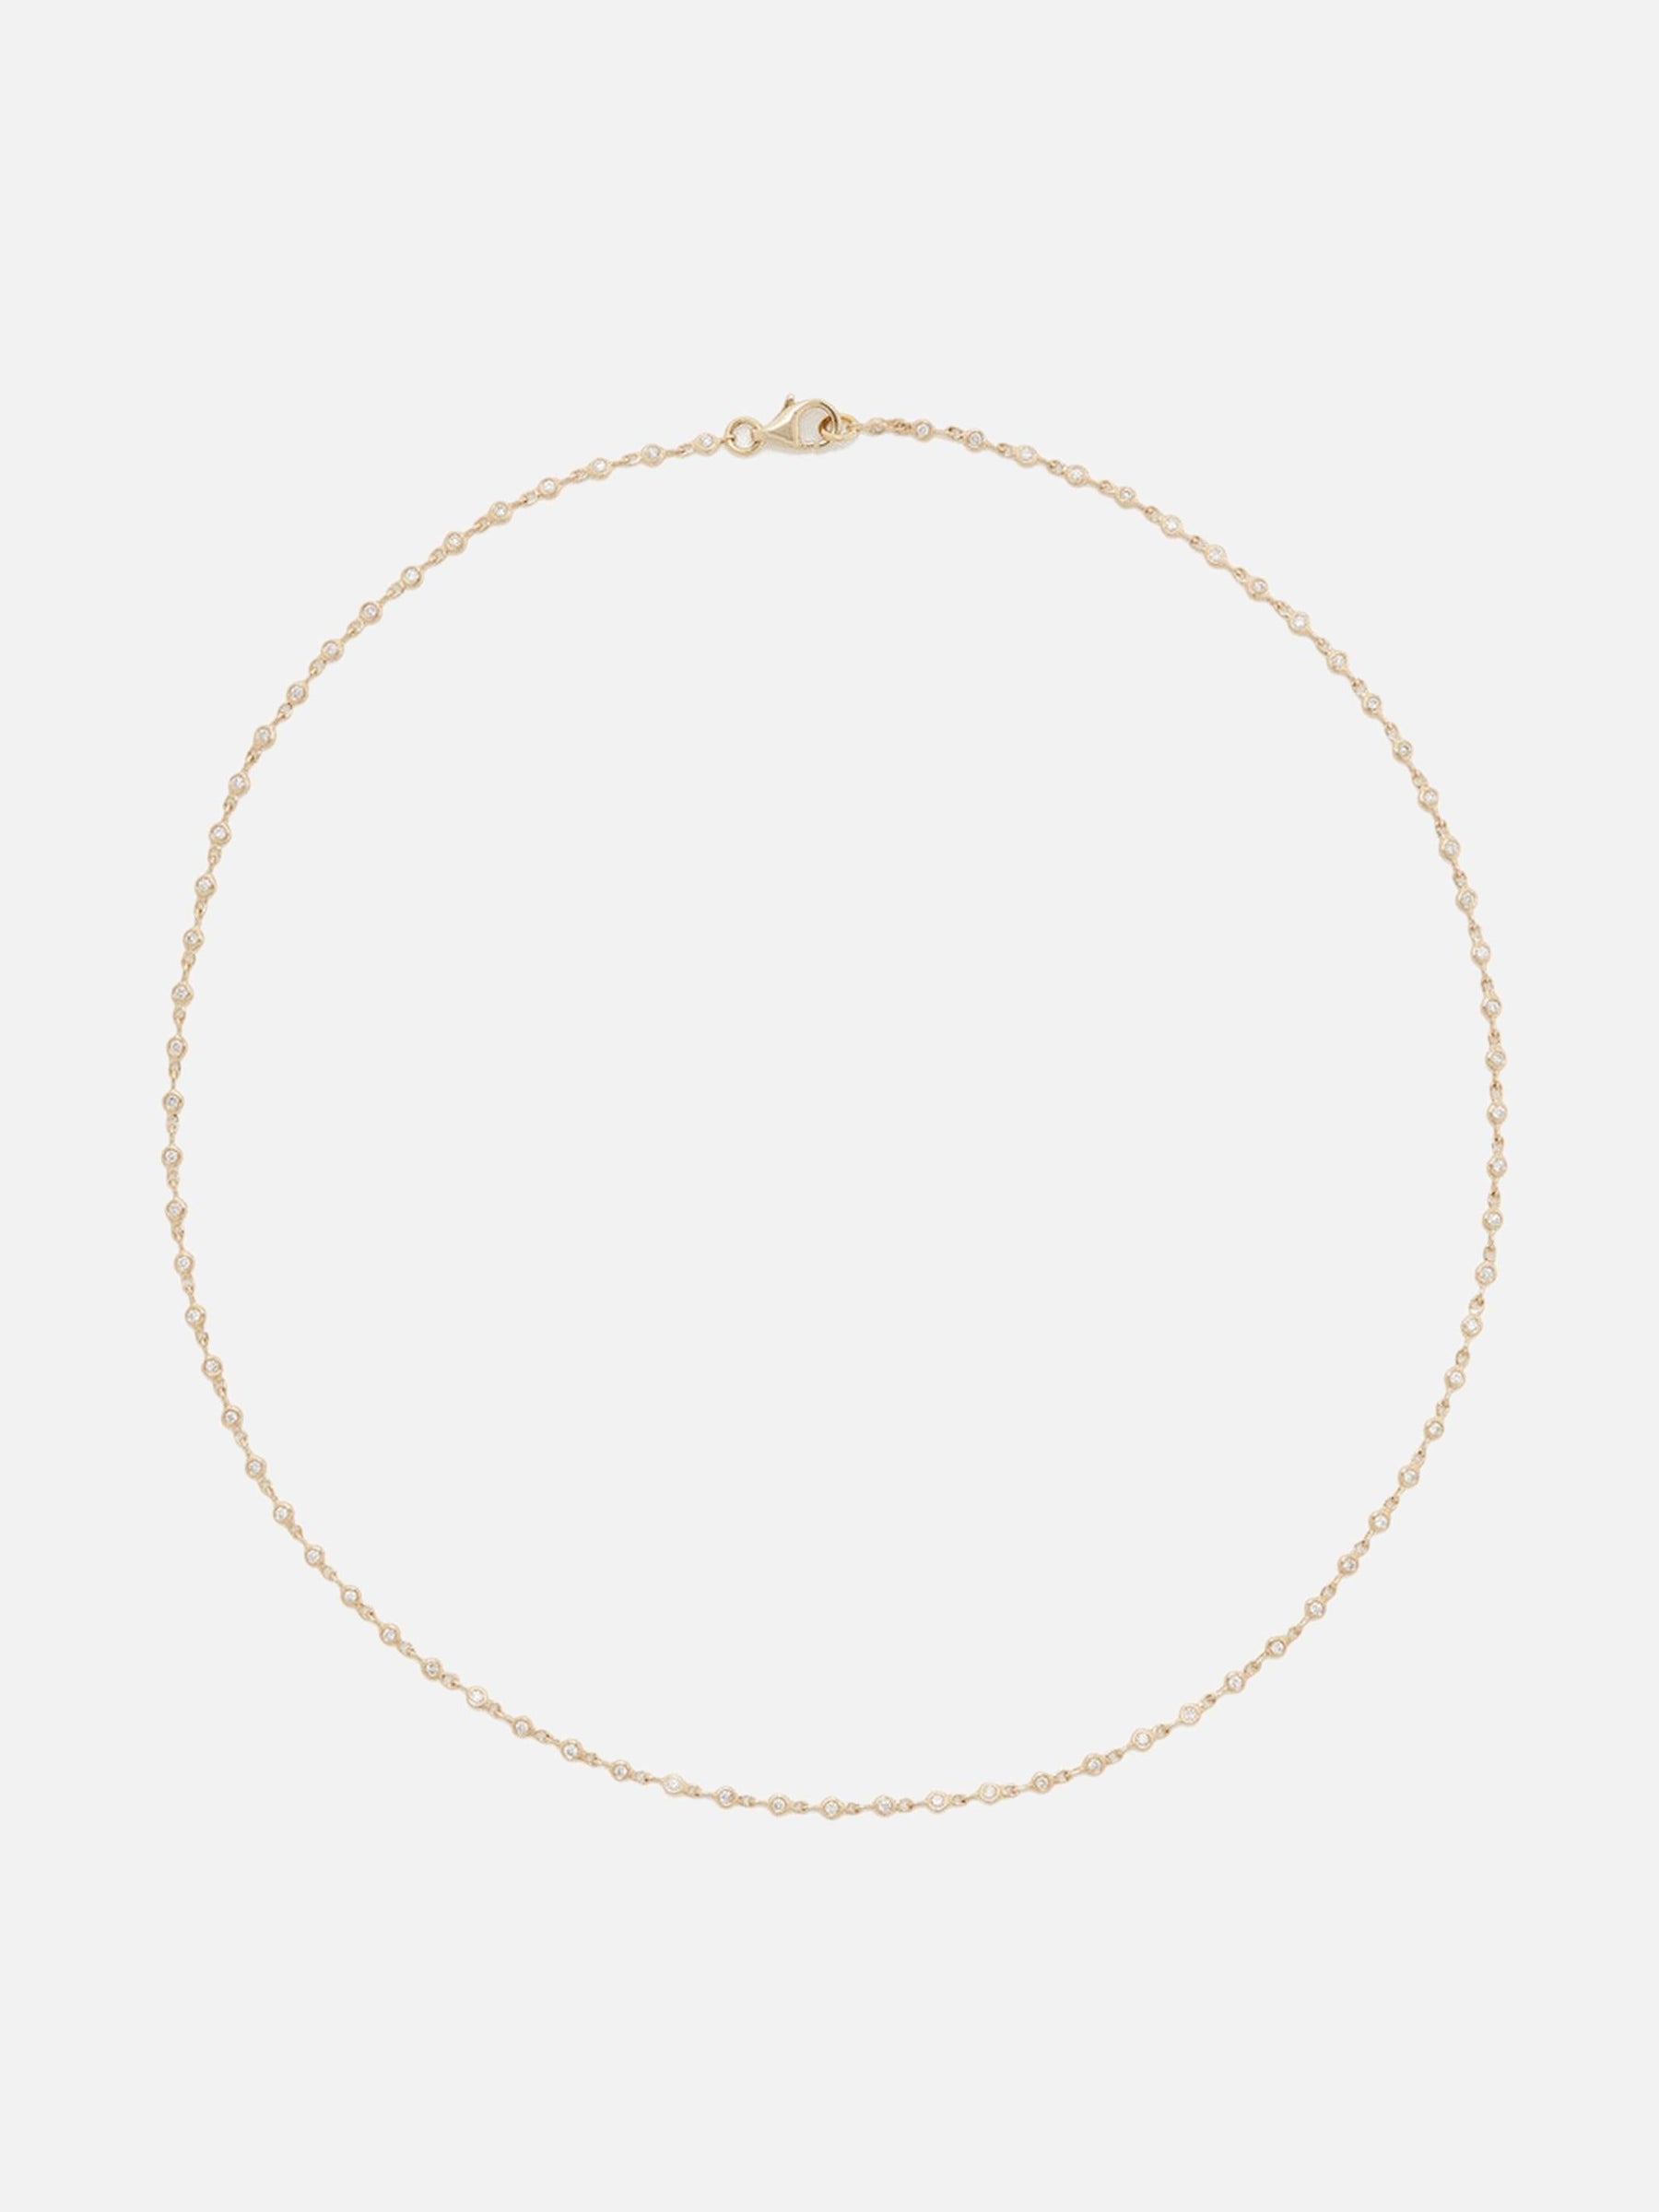 Diamond Ember Necklace - Ariel Gordon Jewelry - At Present